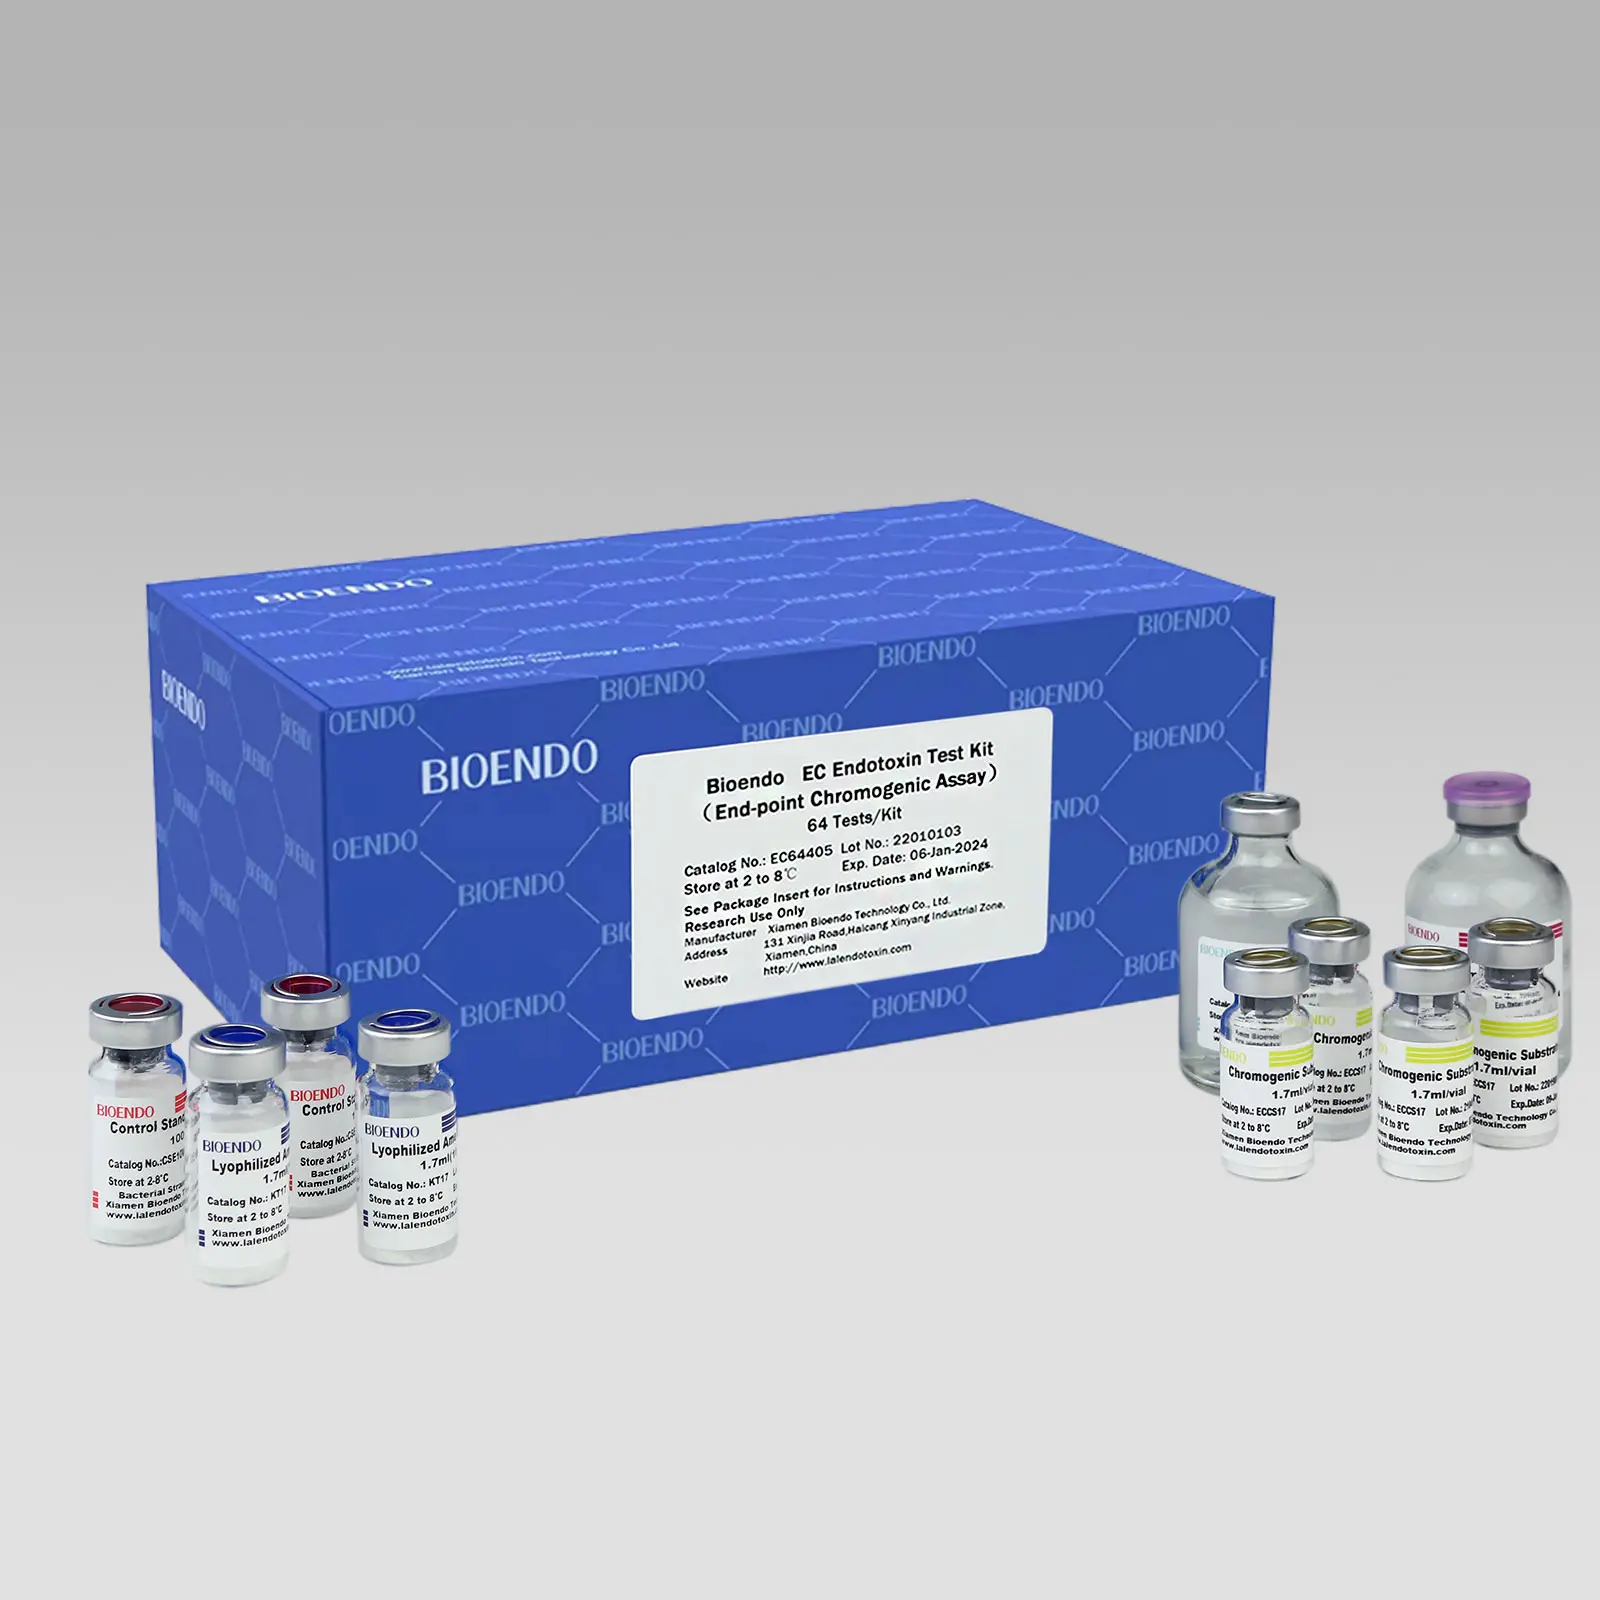 Bioendo KT Endotoxin Test Kit